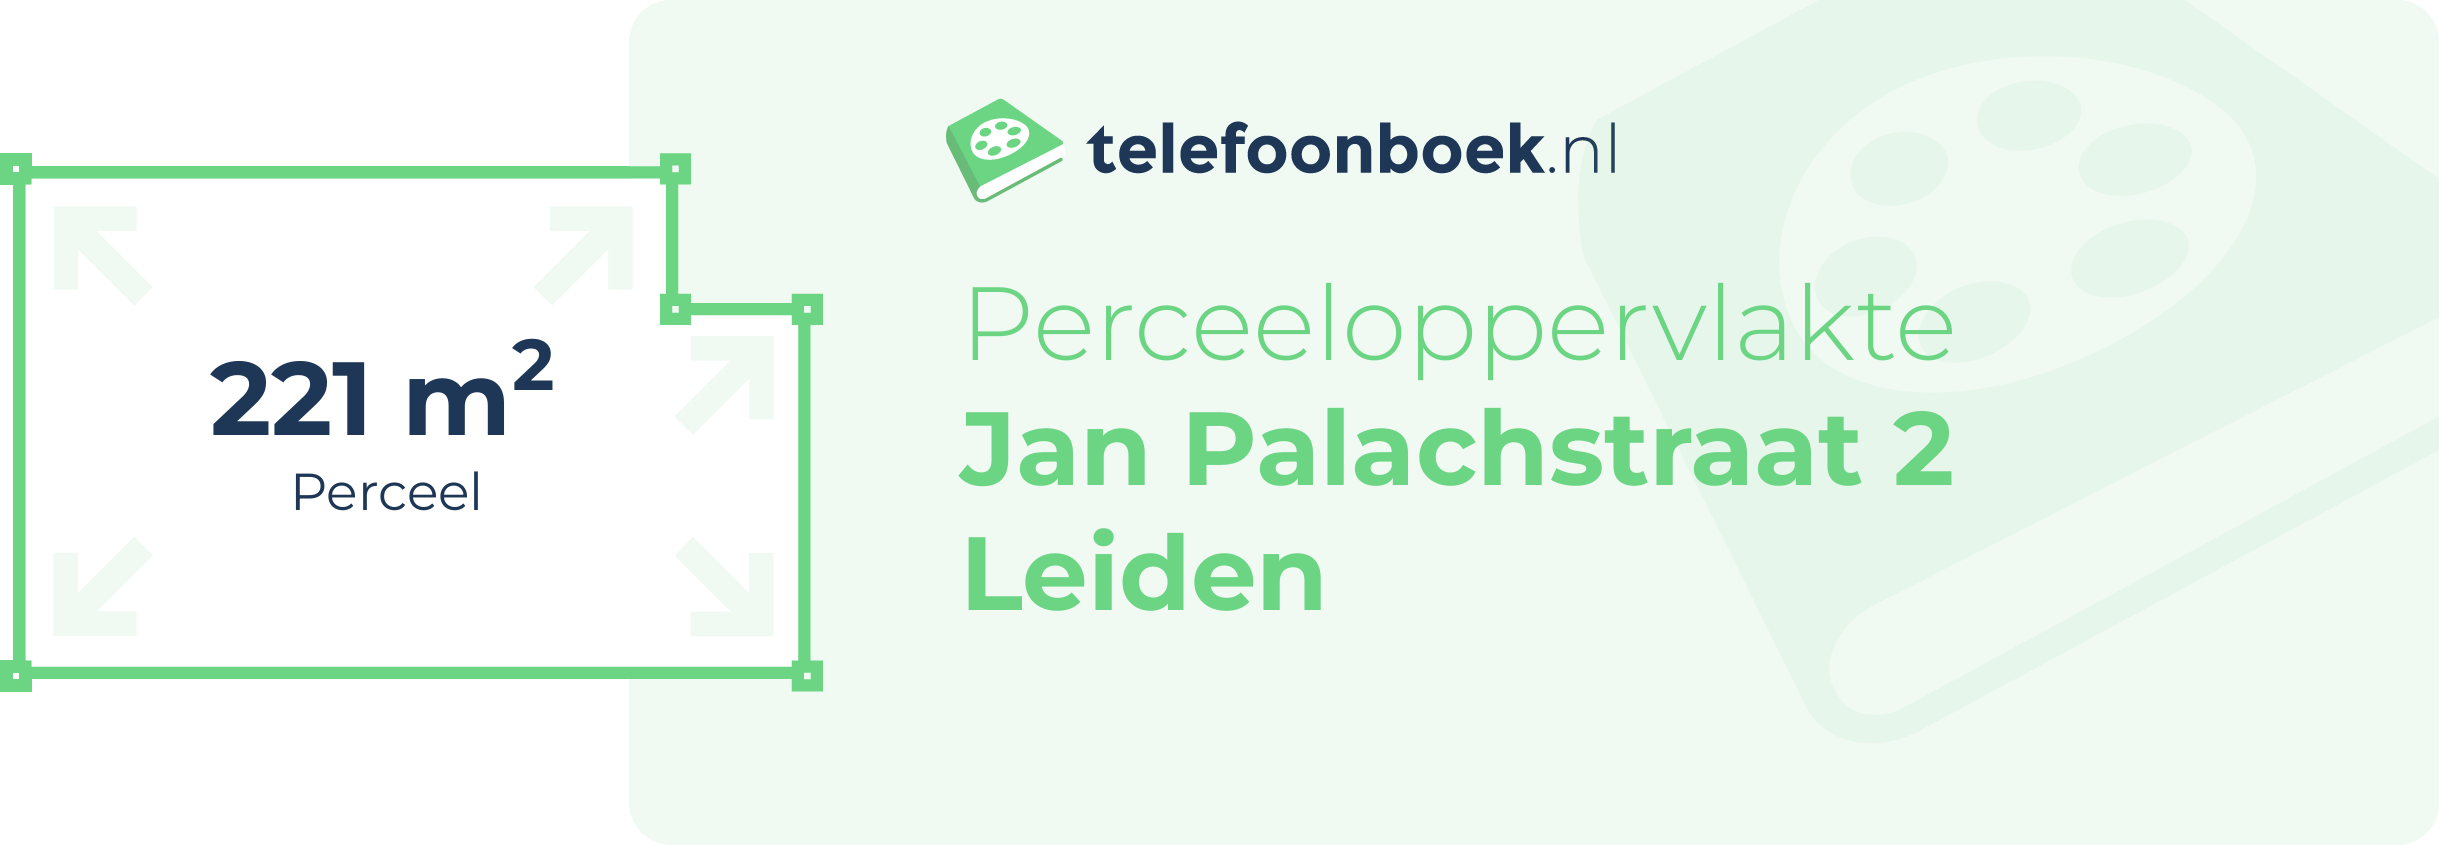 Perceeloppervlakte Jan Palachstraat 2 Leiden